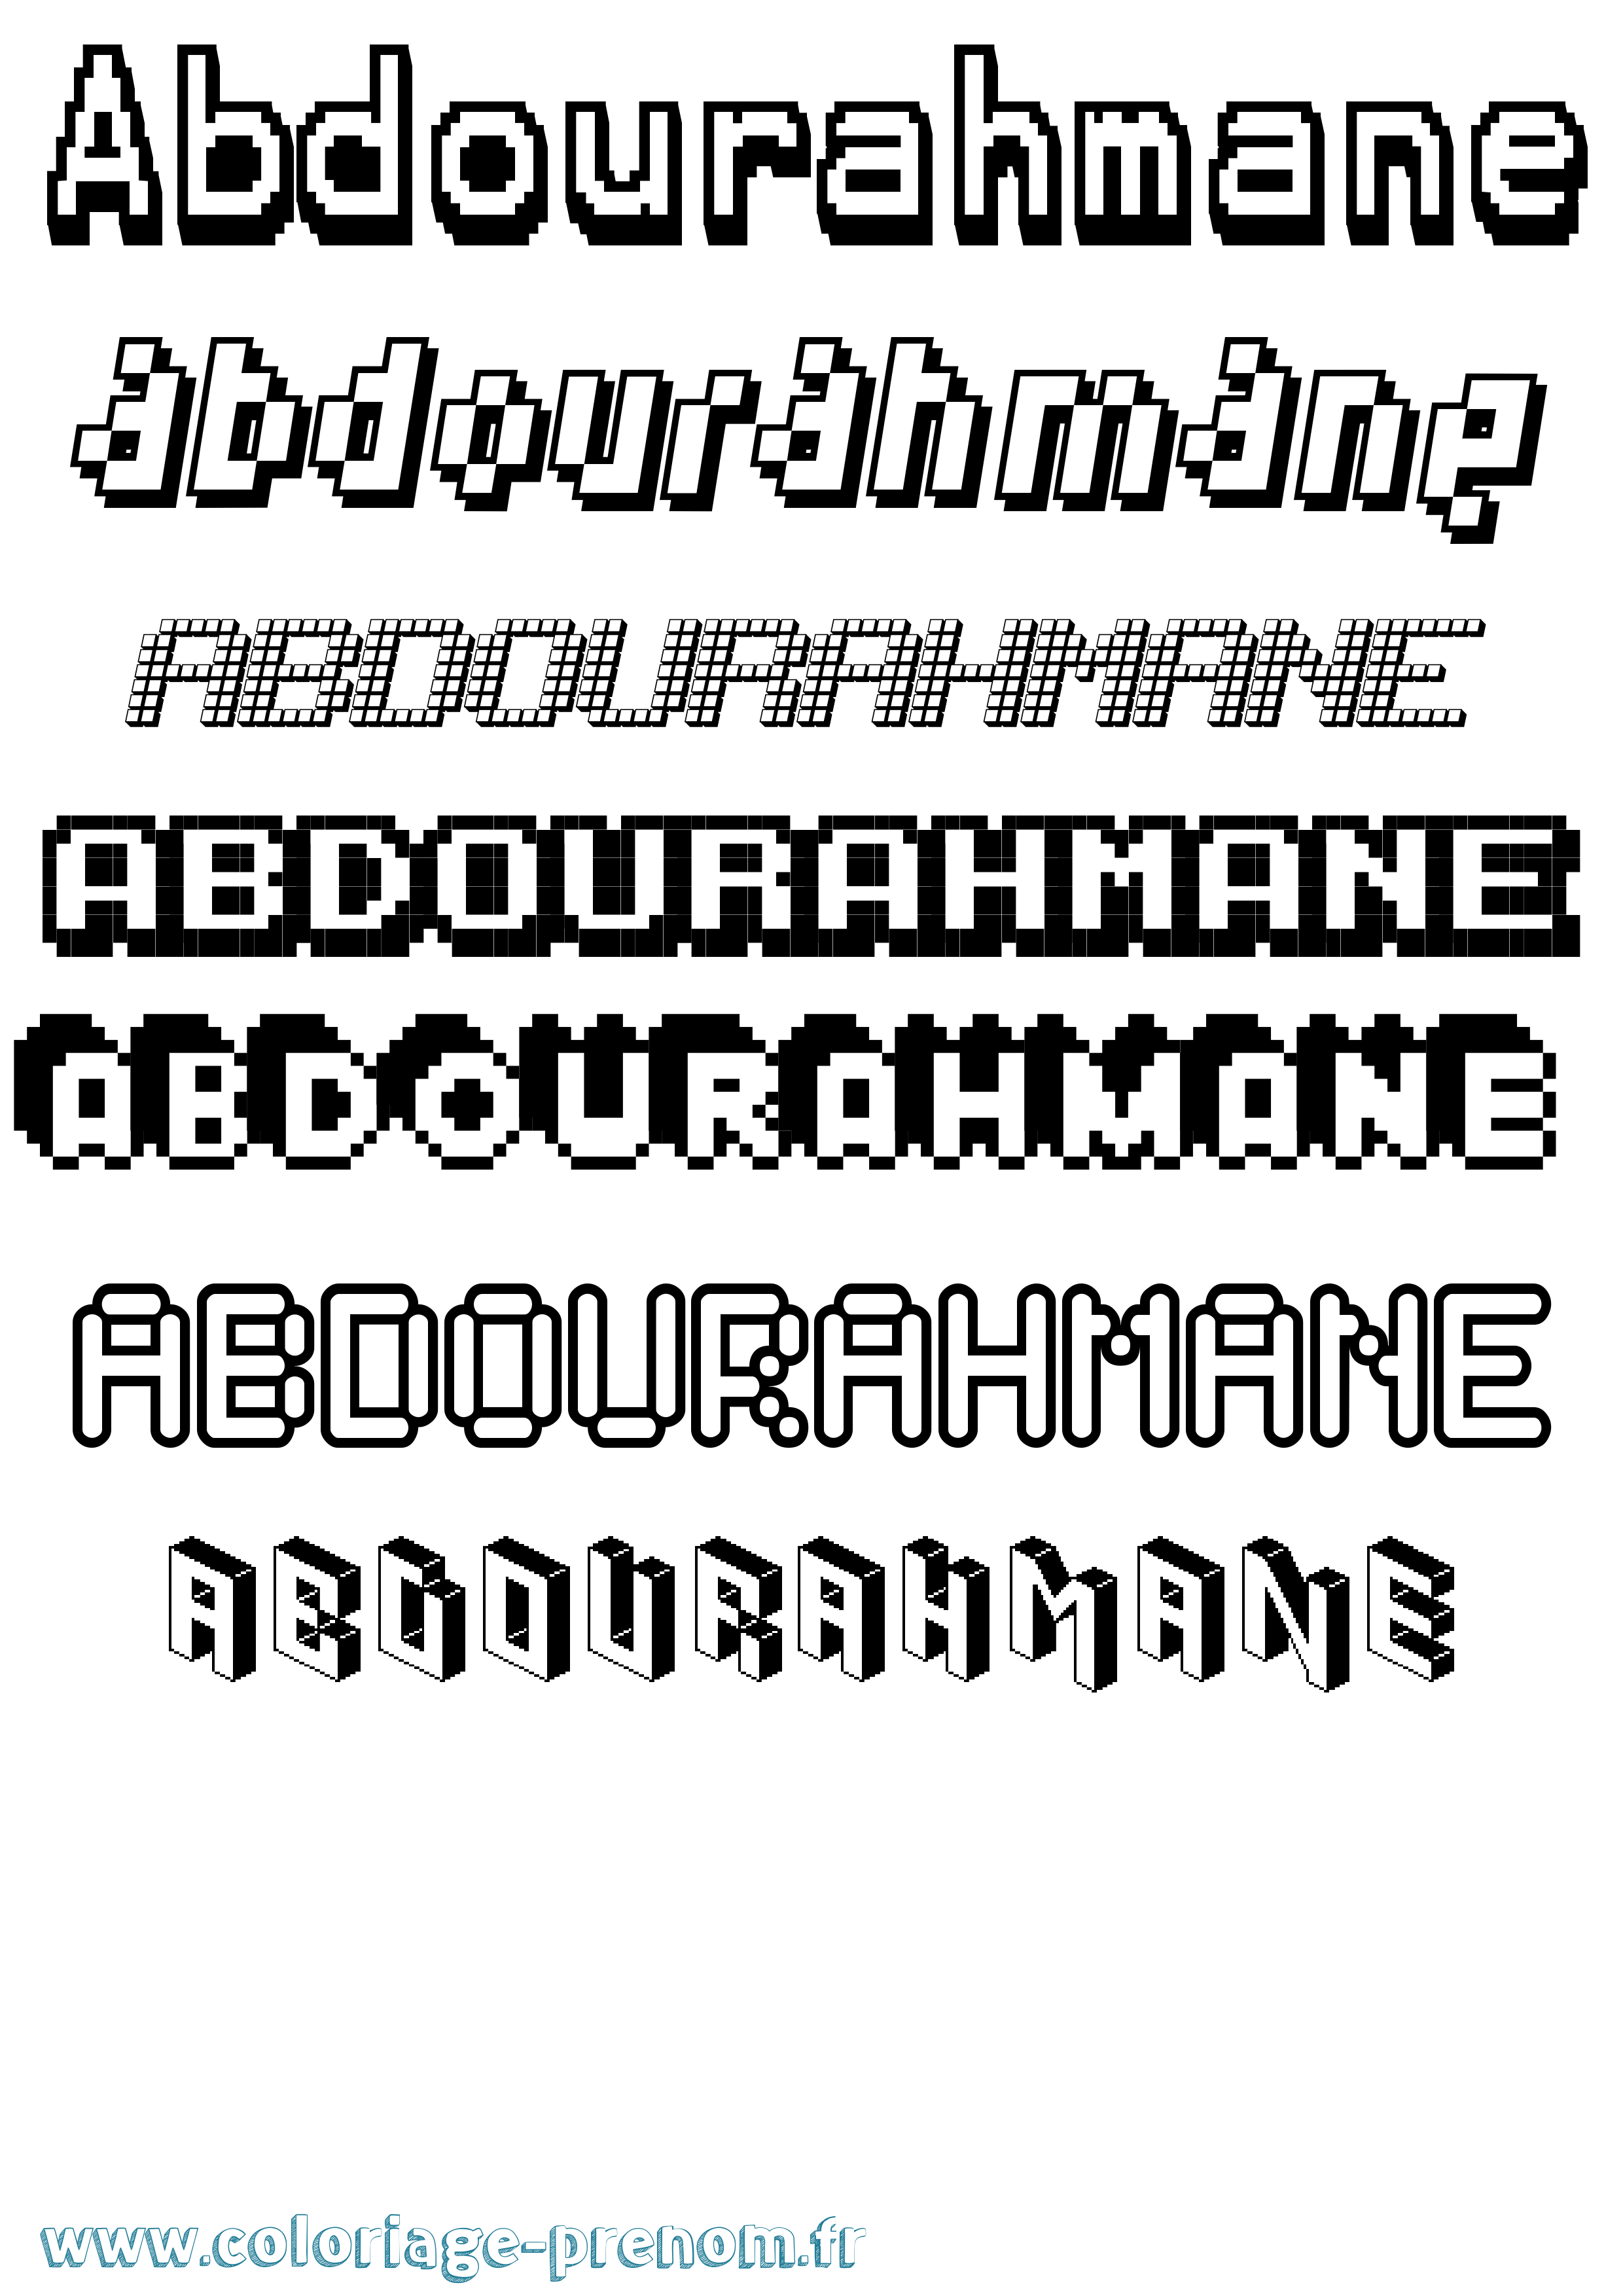 Coloriage prénom Abdourahmane Pixel